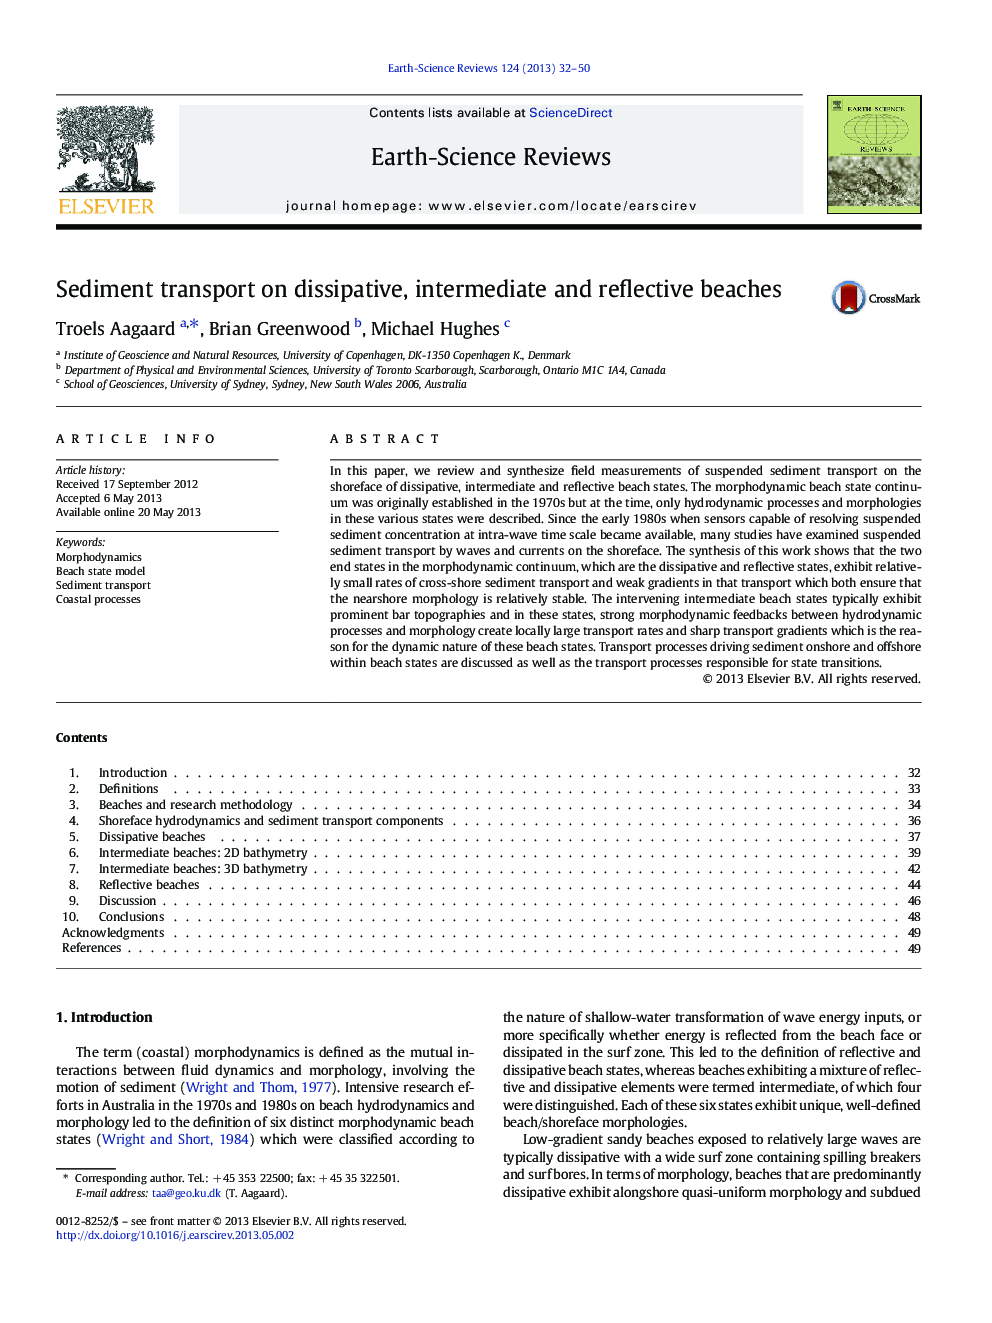 Sediment transport on dissipative, intermediate and reflective beaches